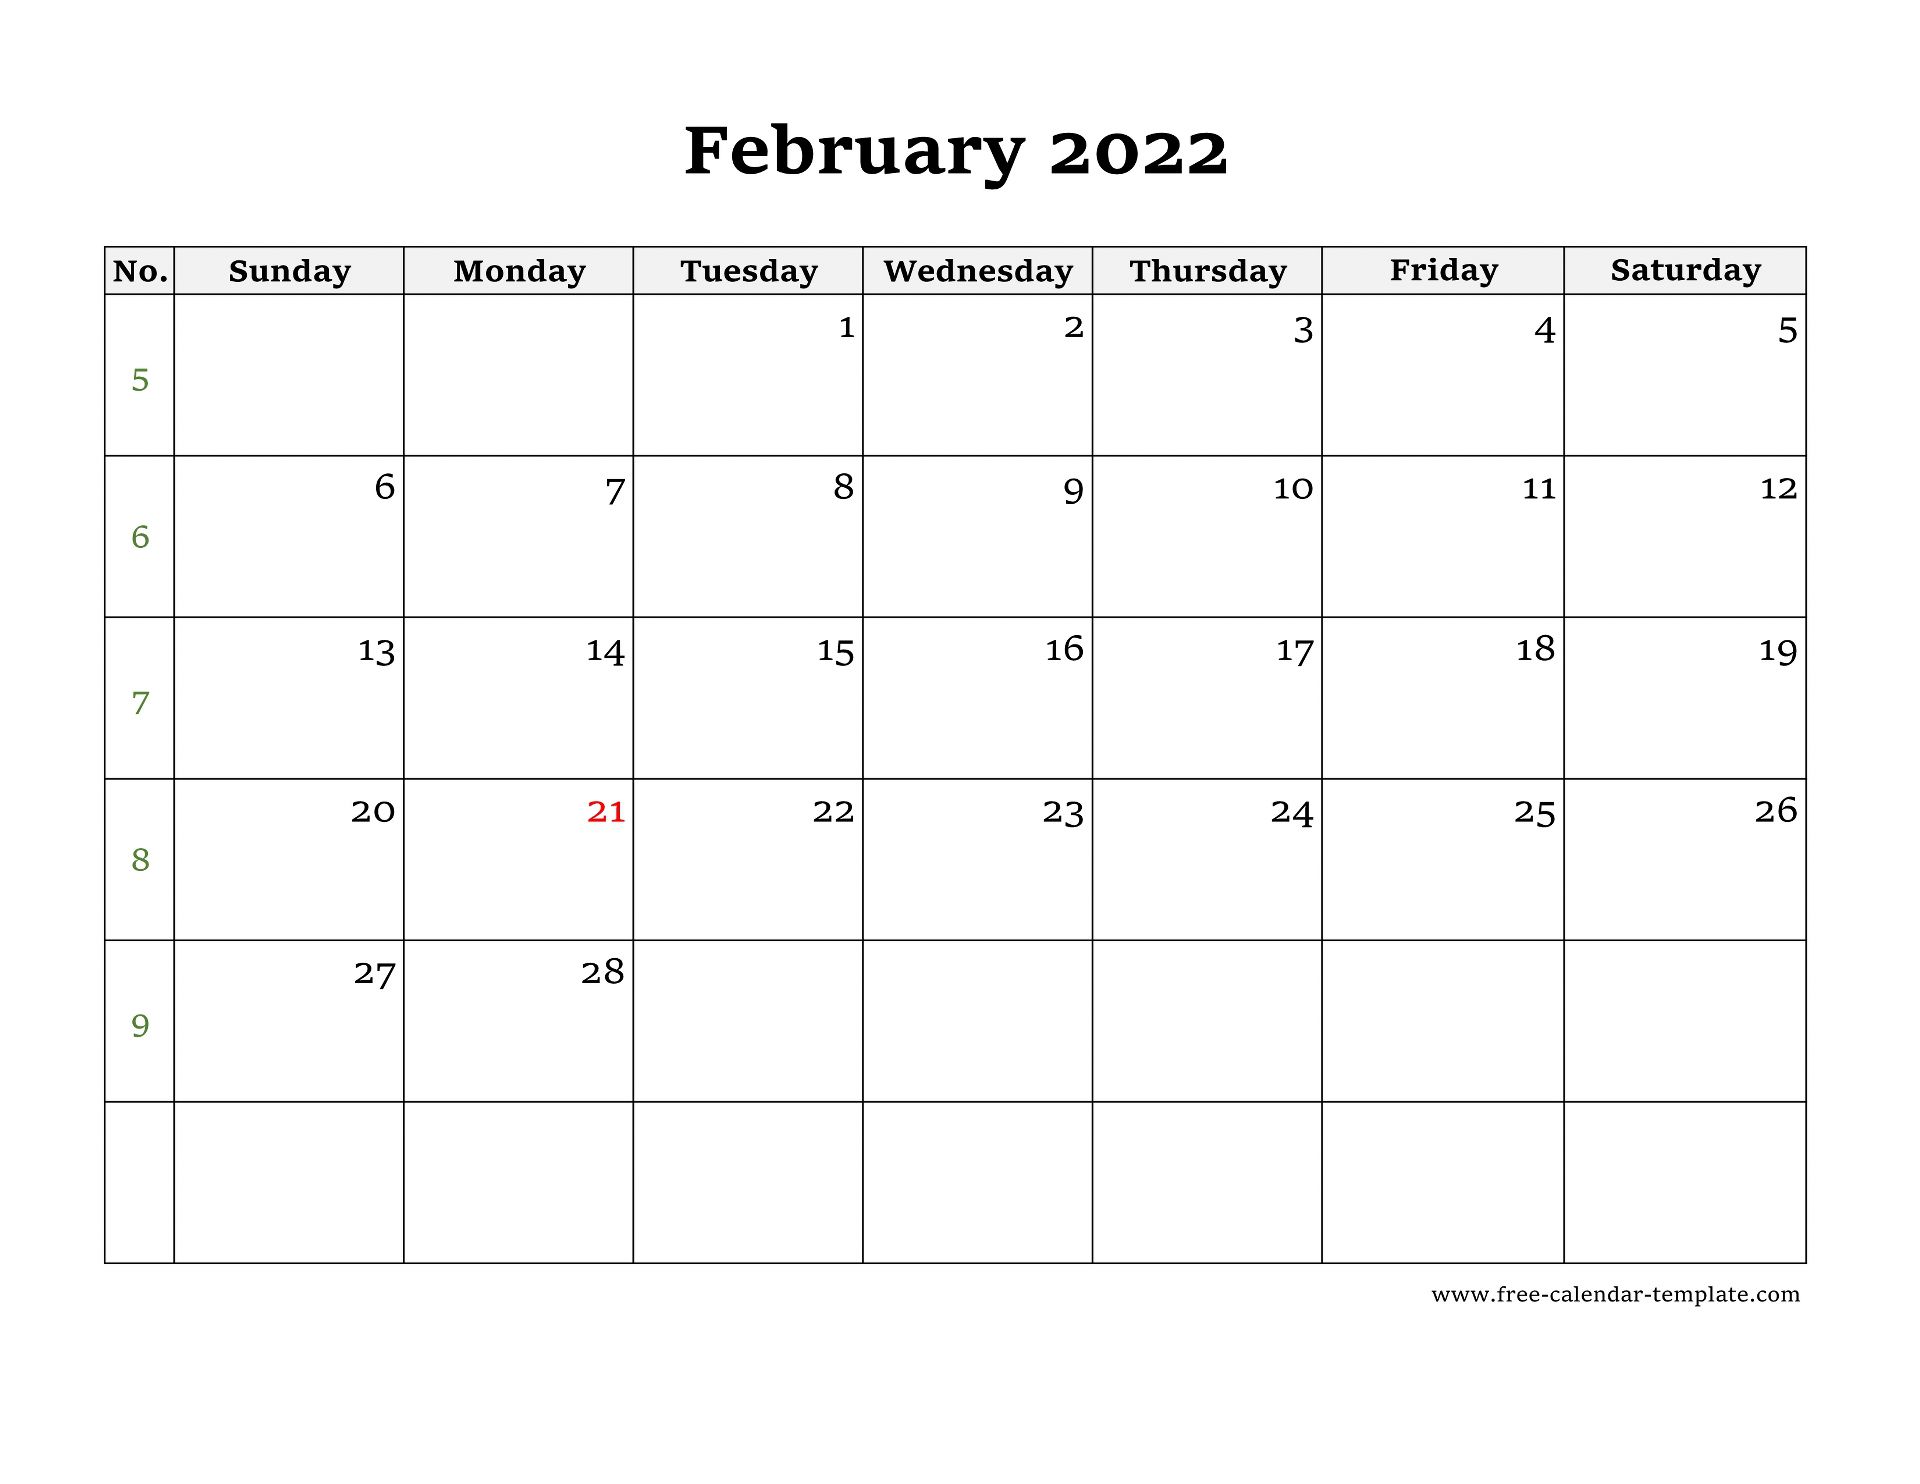 February 2022 calendar